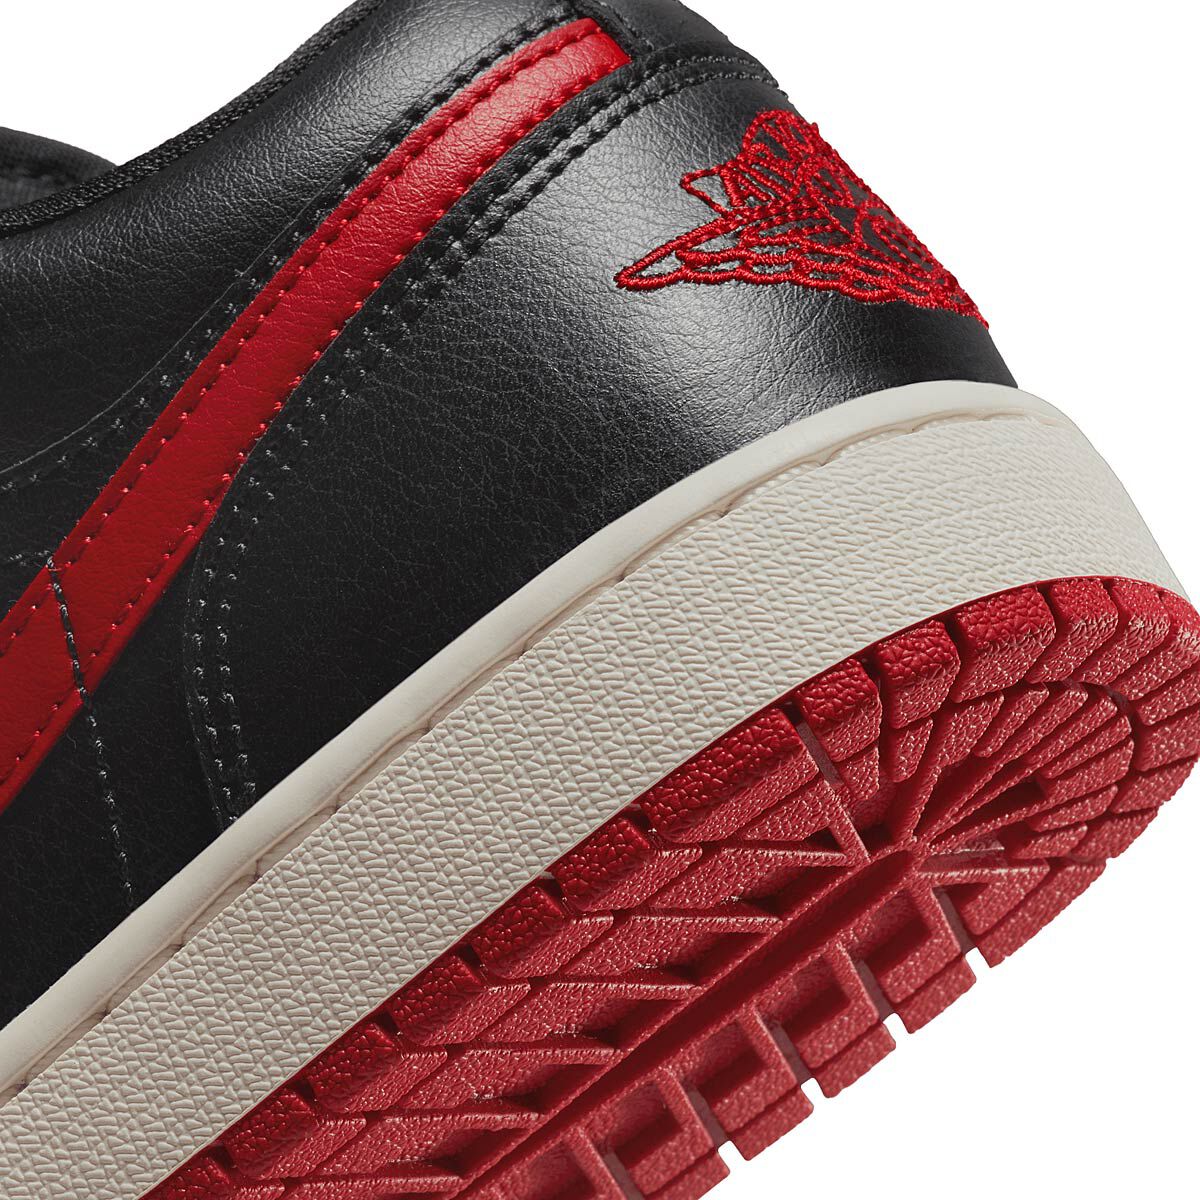 最安値特価Nike Air Jordan 1 Low Bred Toe　27.0cm 27.0cm